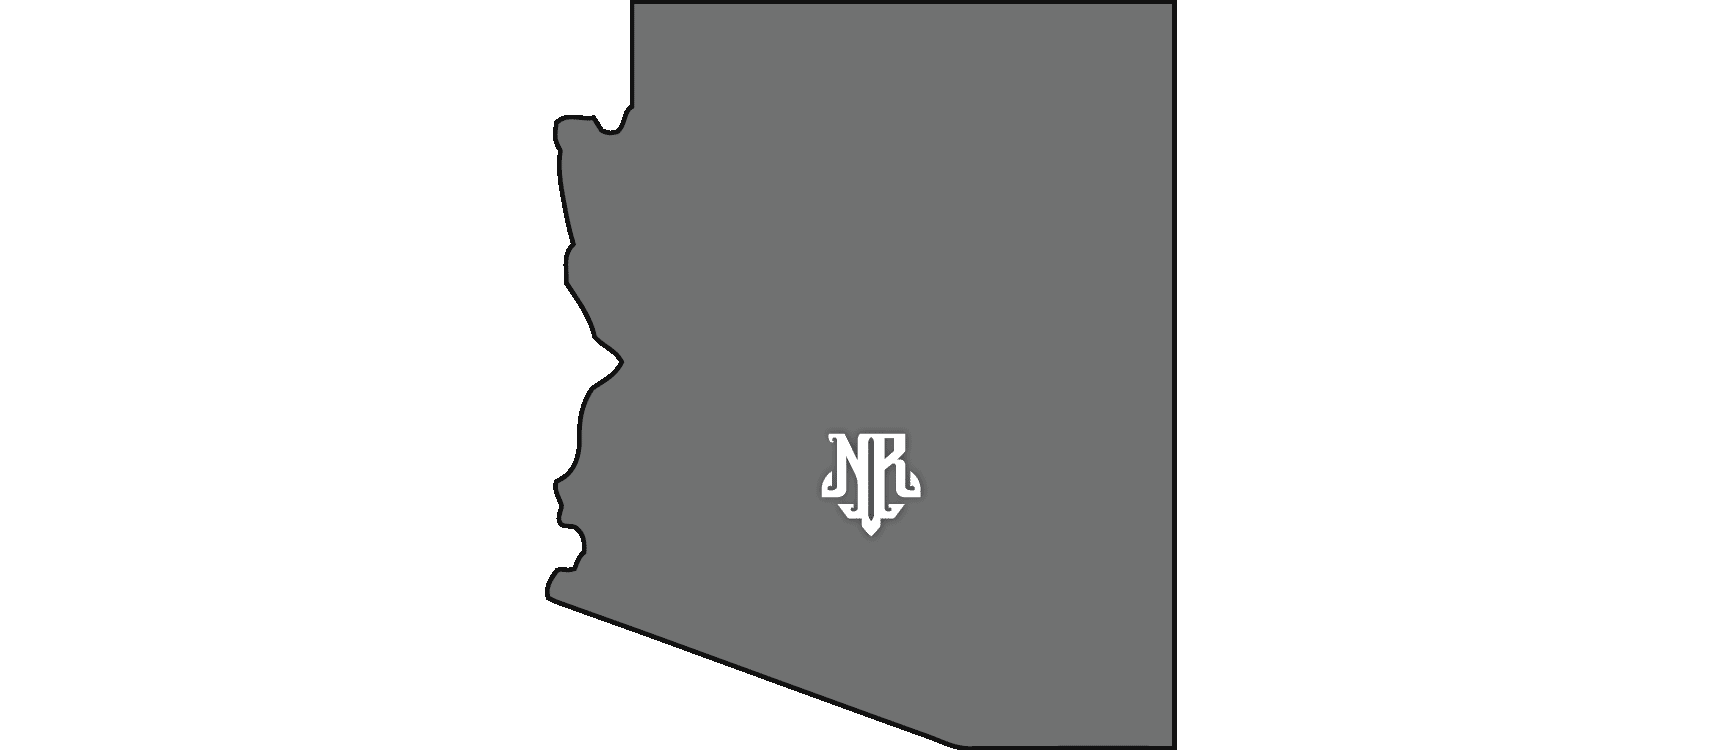 The State of Arizona with NightRider Jewelry logo